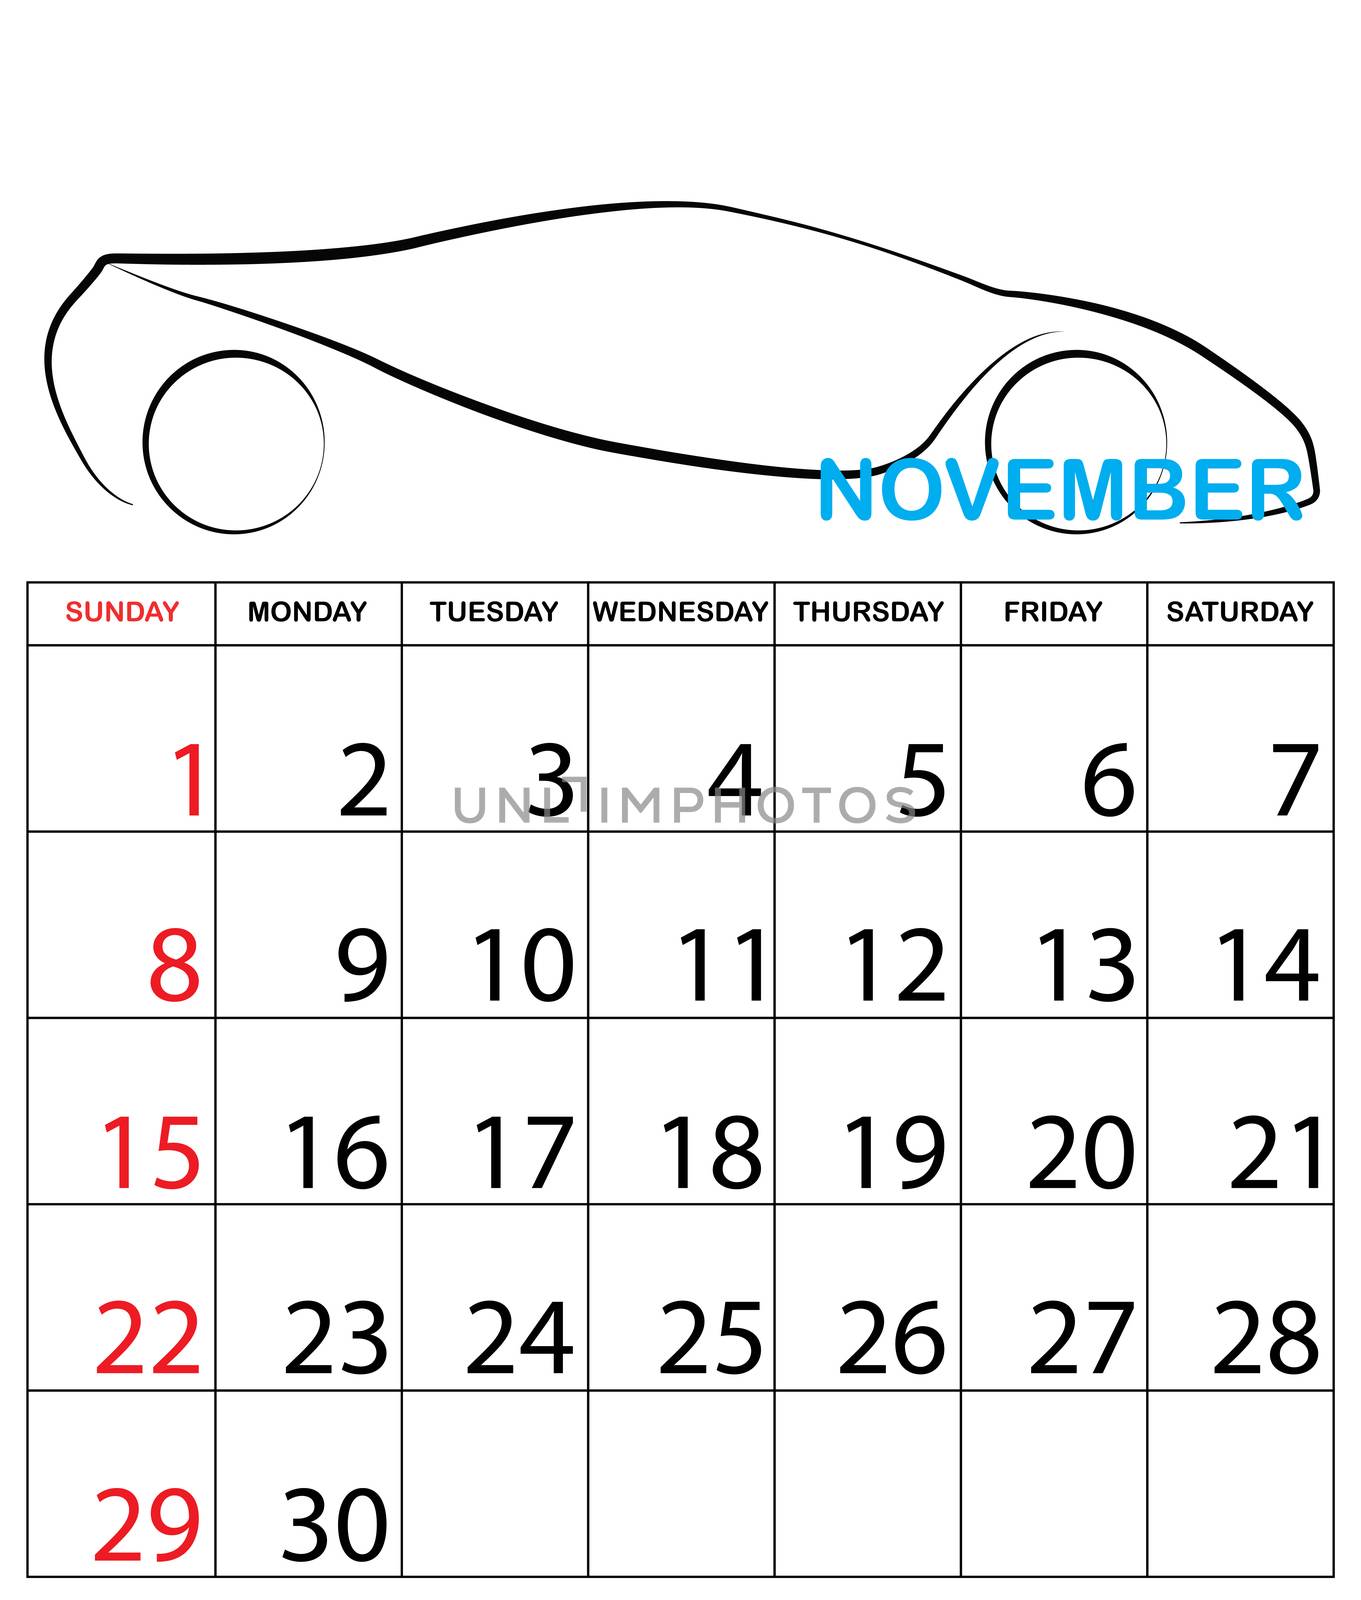 An Illustration of a Simple 2015 year calendar